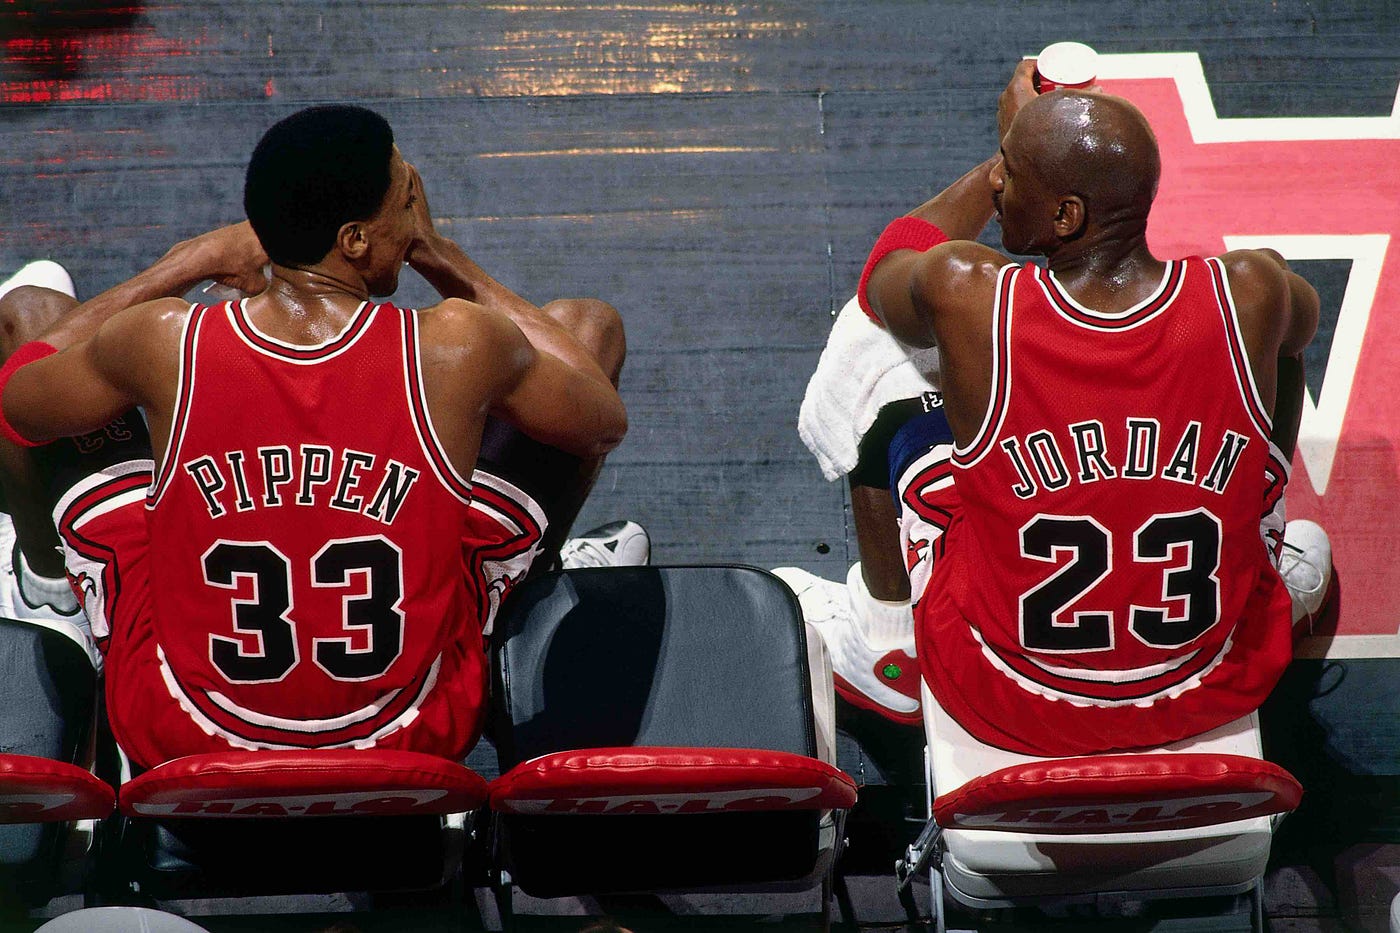 NBA: Remembering Michael Jordan's last shot for the Chicago Bulls